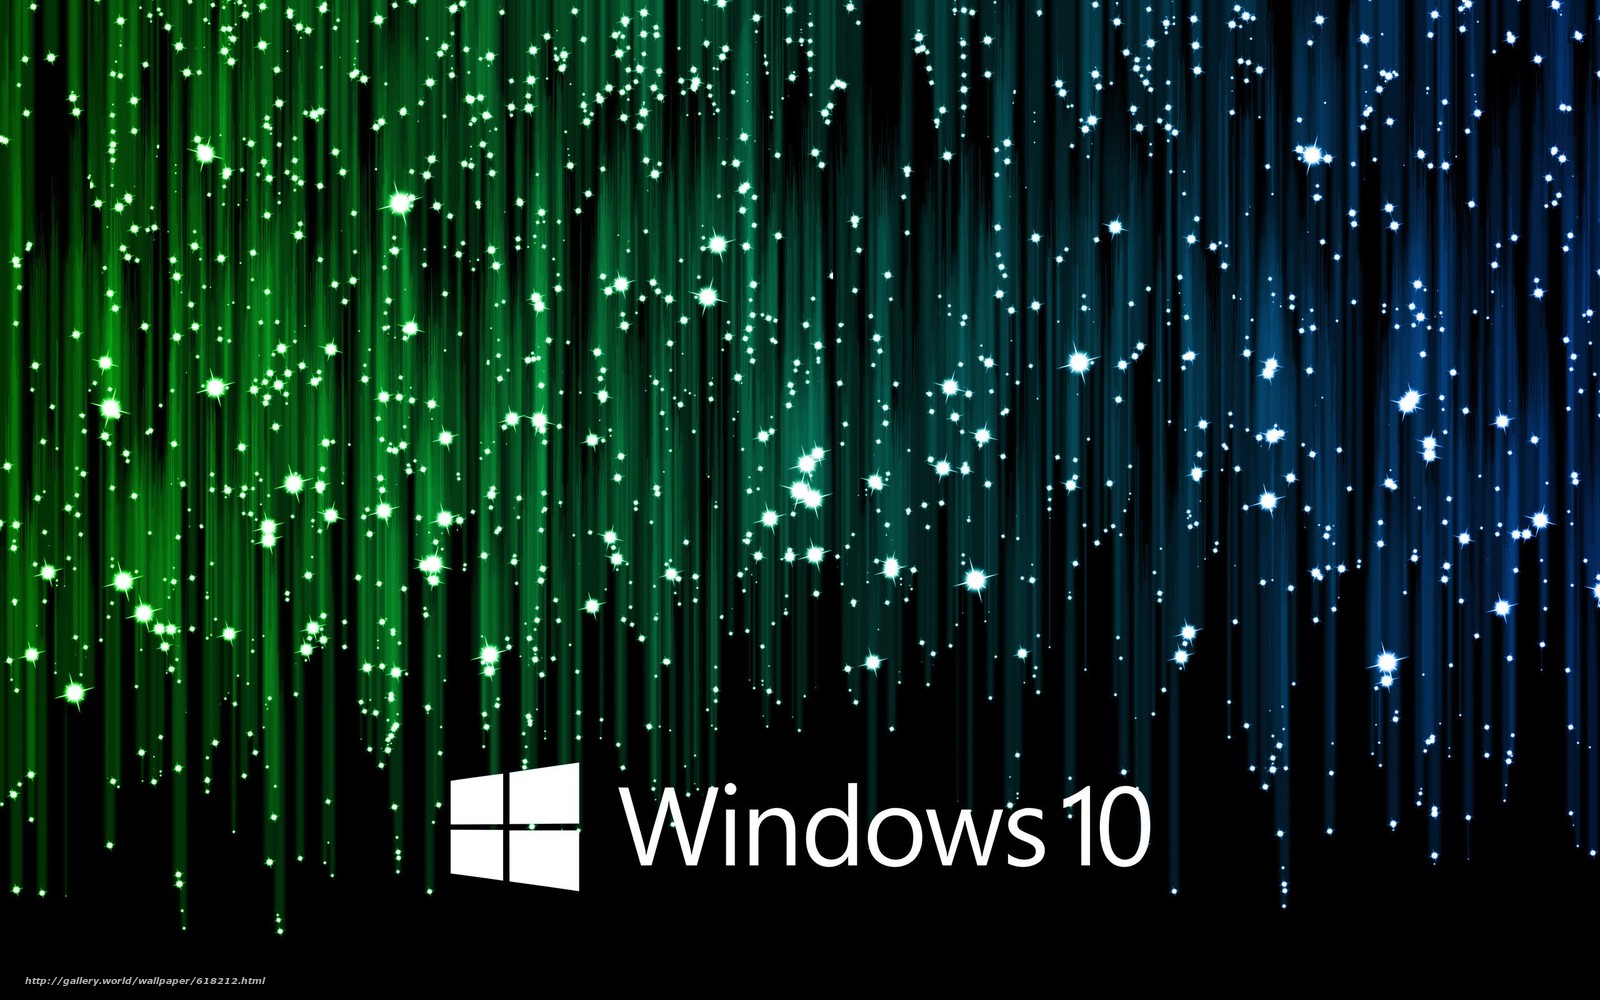 Windows 10 wallpaper 4k